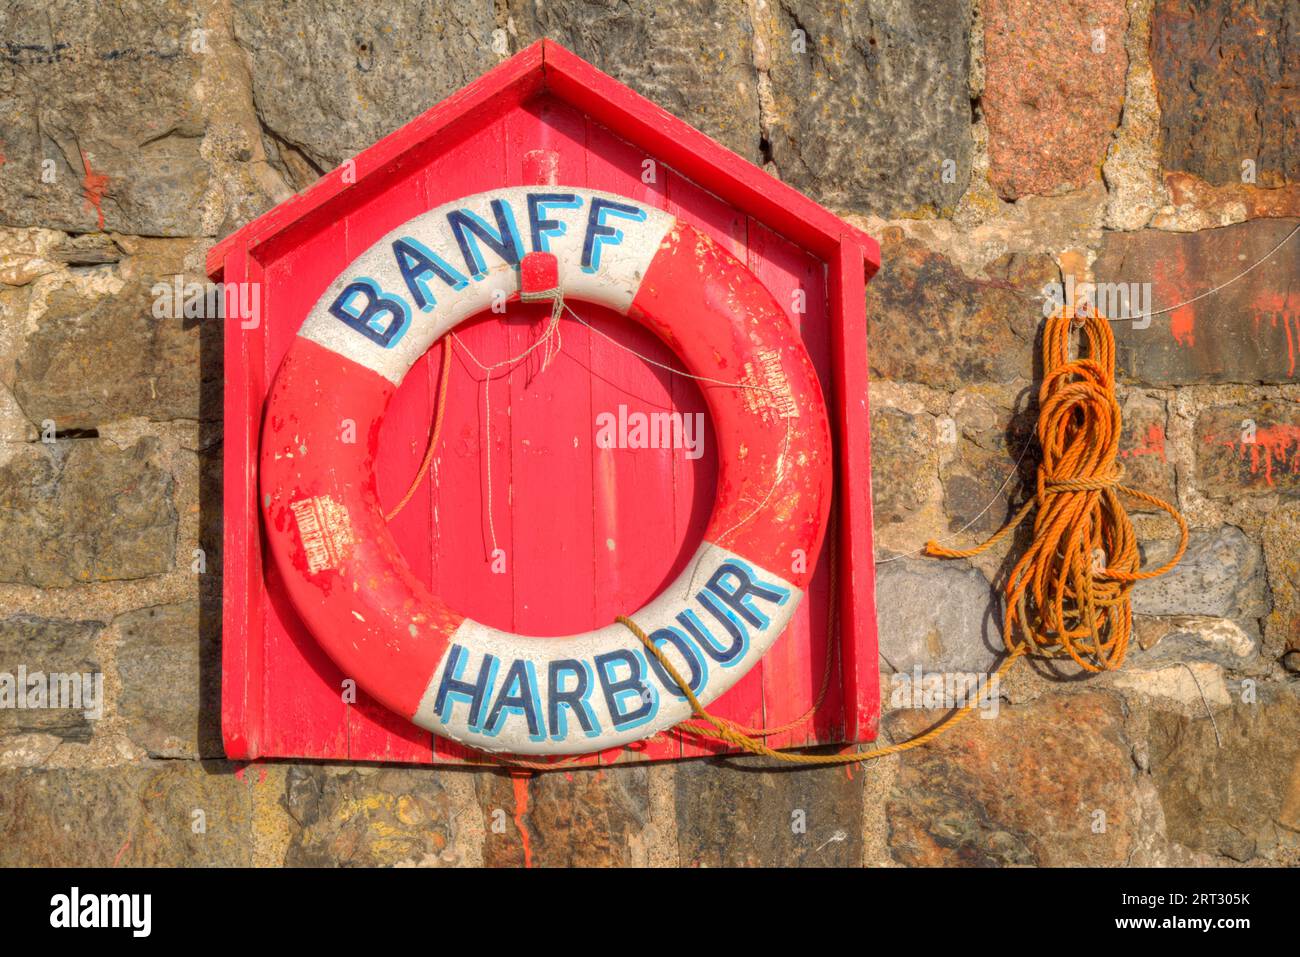 banff harbour aberdeenshire scotland Stock Photo